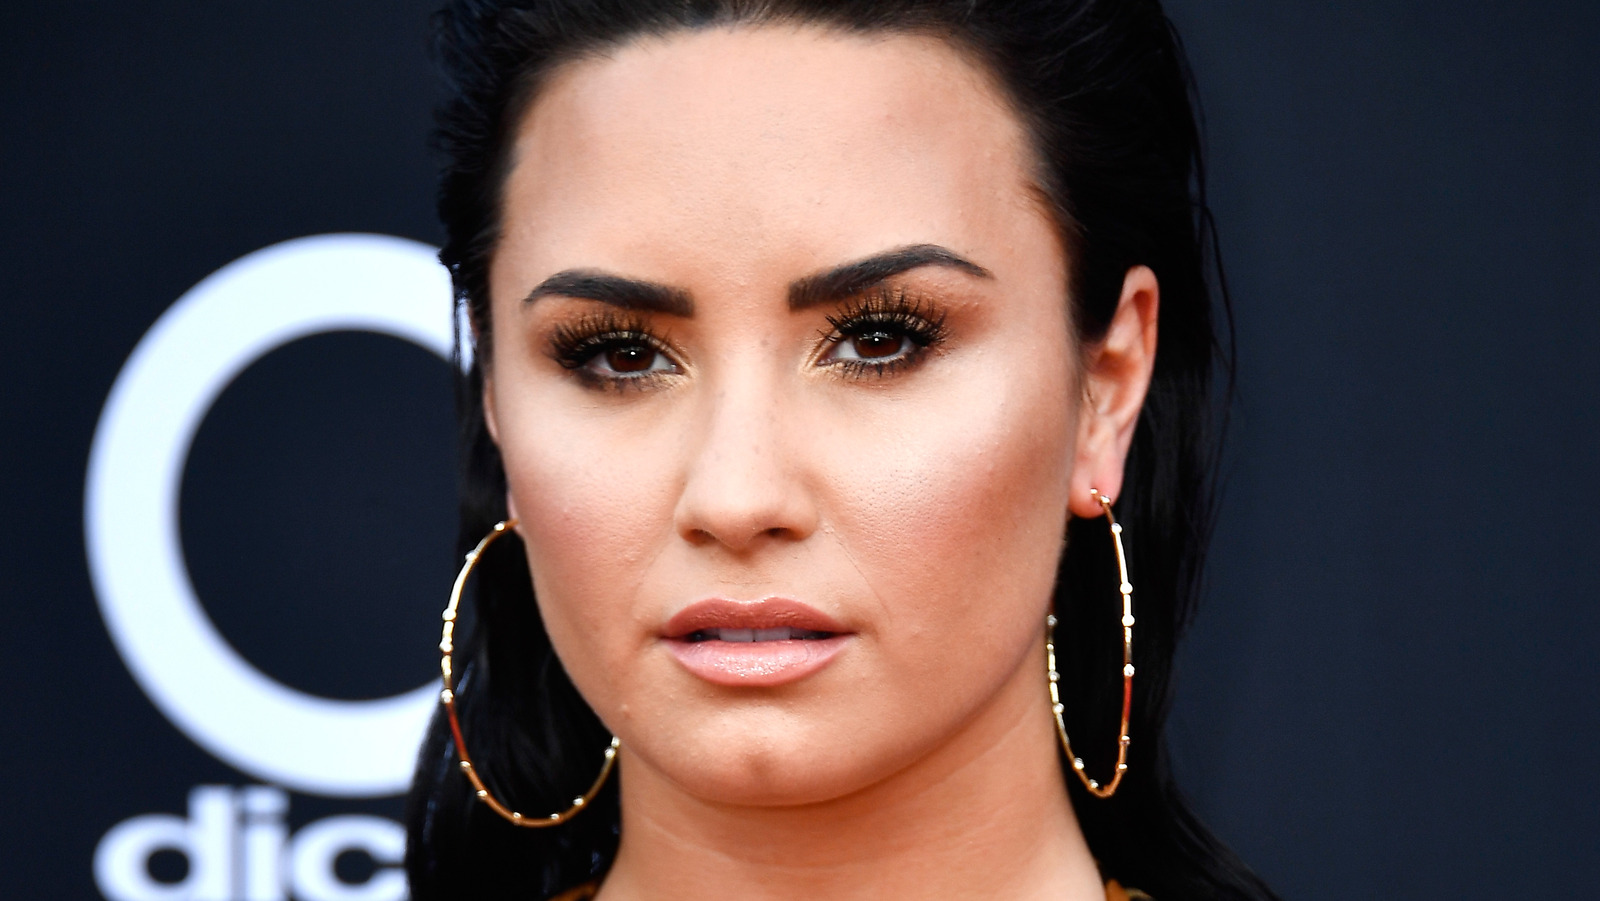 Demi Lovato Responds To Backlash Over Alleged Secret Instagram